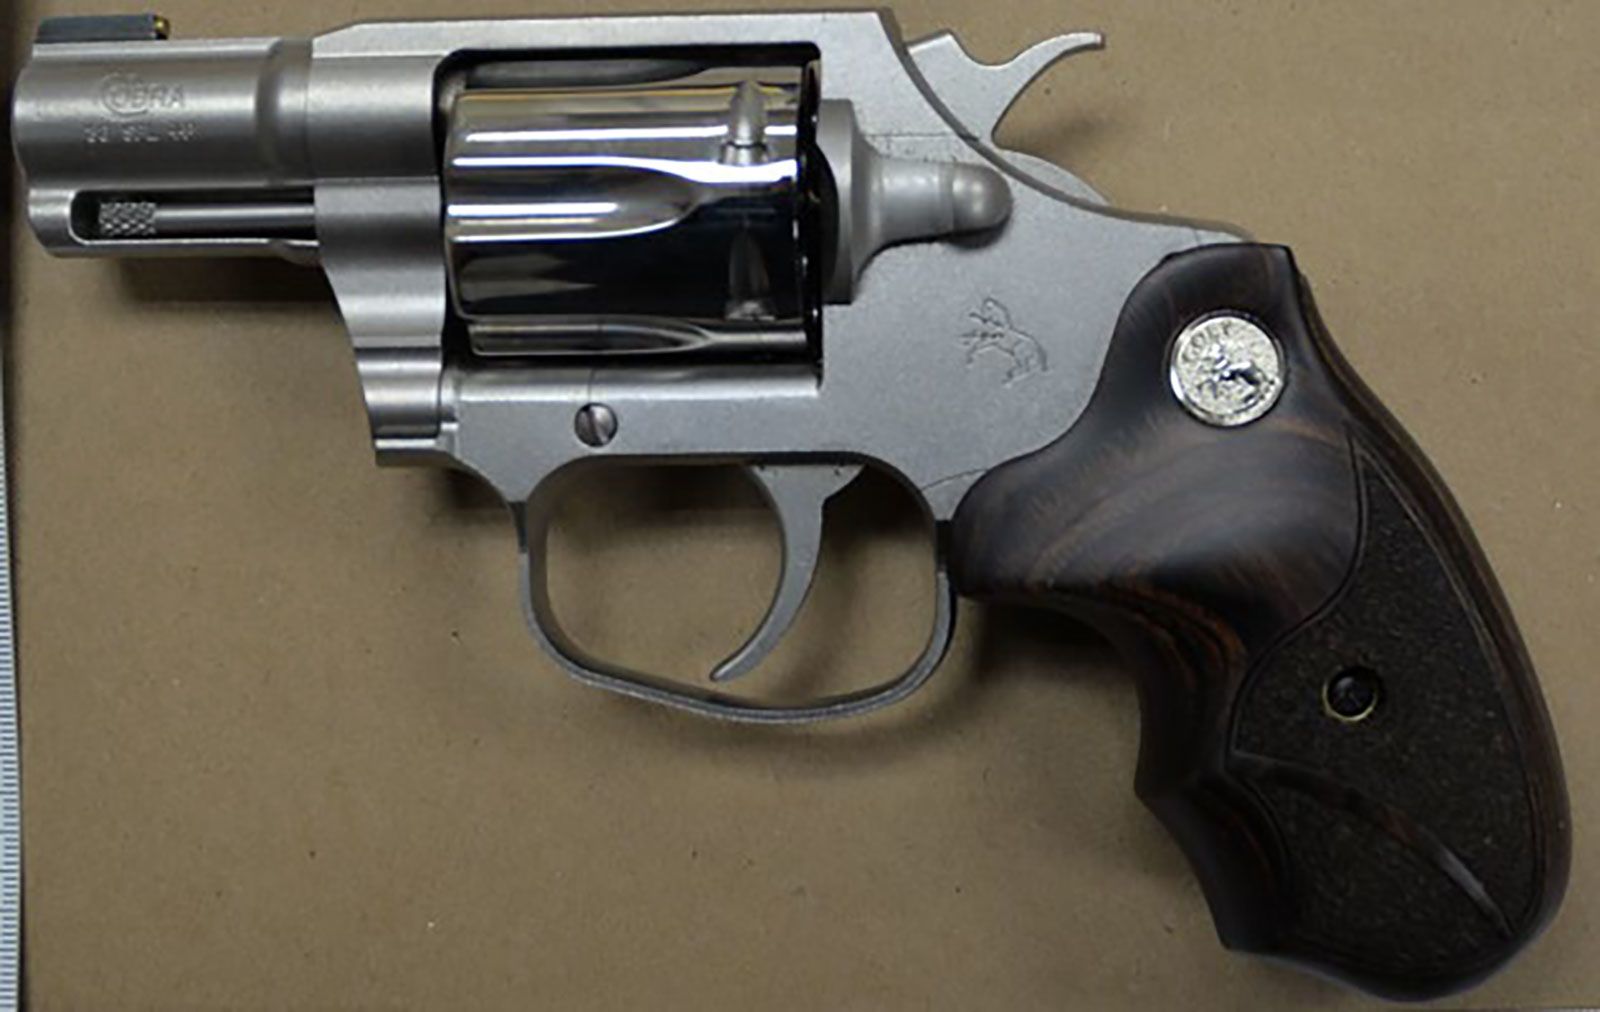 A Colt Cobra 38SPL revolver that Hunter Biden purchased from a gun store in Wilmington, Delaware, in October 2018.